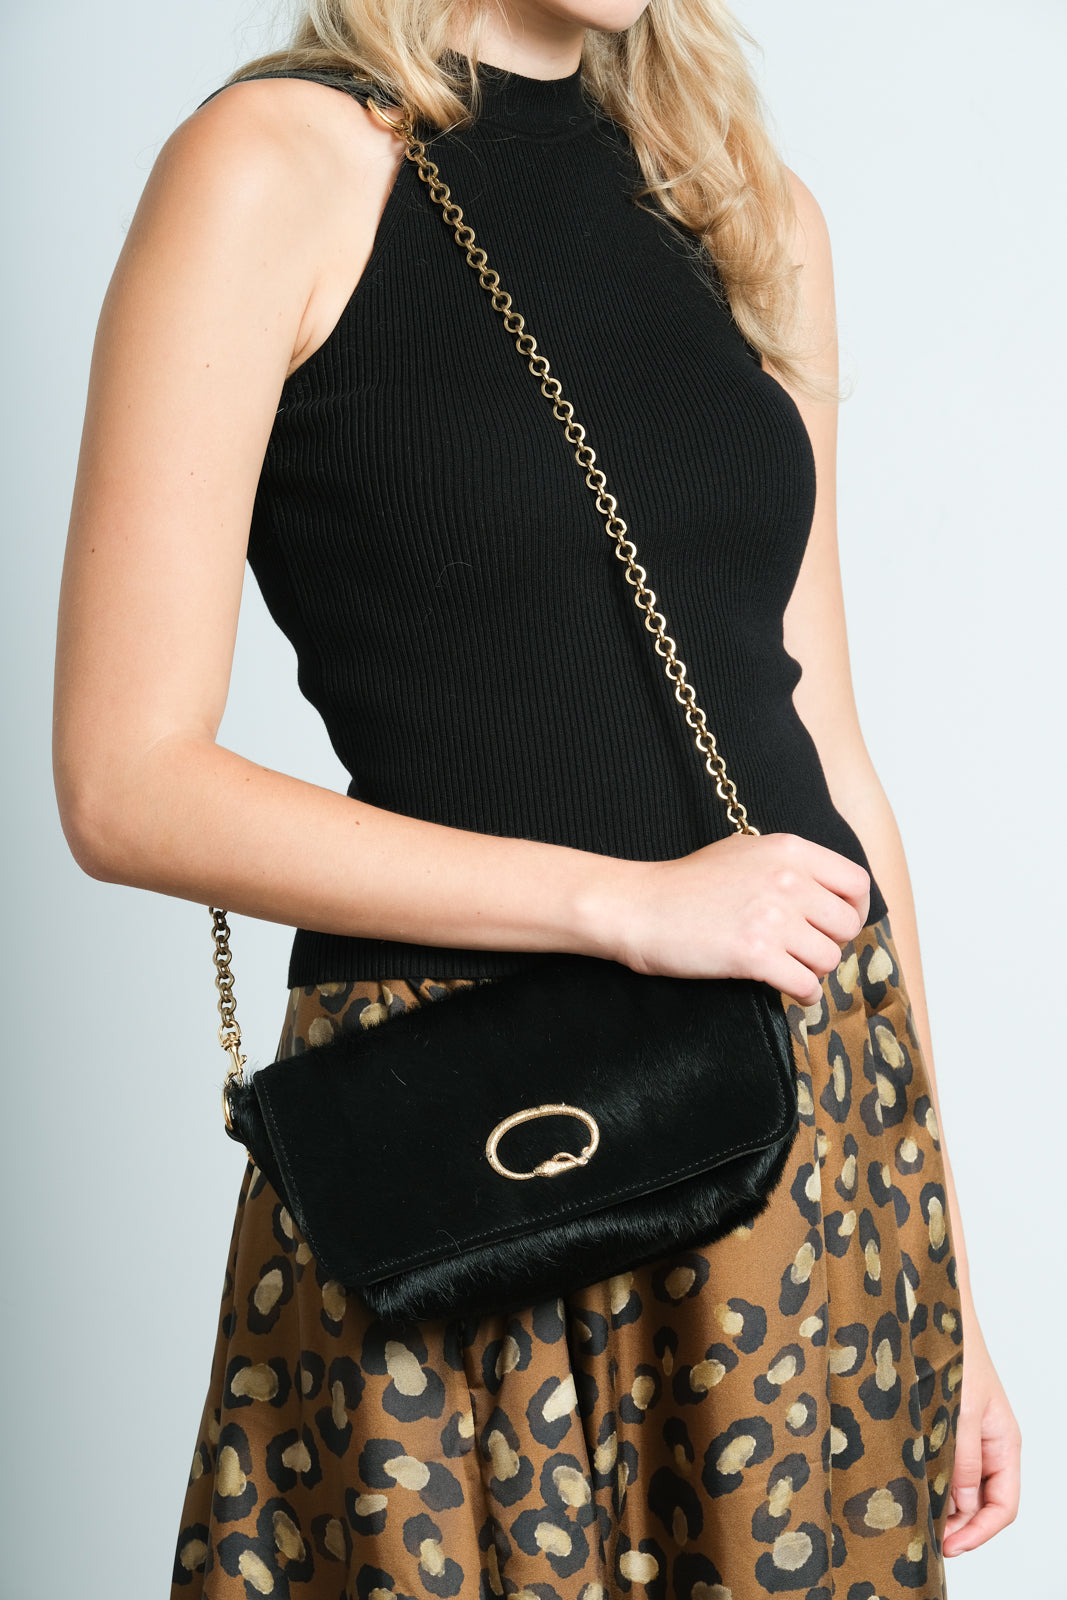 SLP Mai Tai bag in black with cobra motif,  gold detachable chain